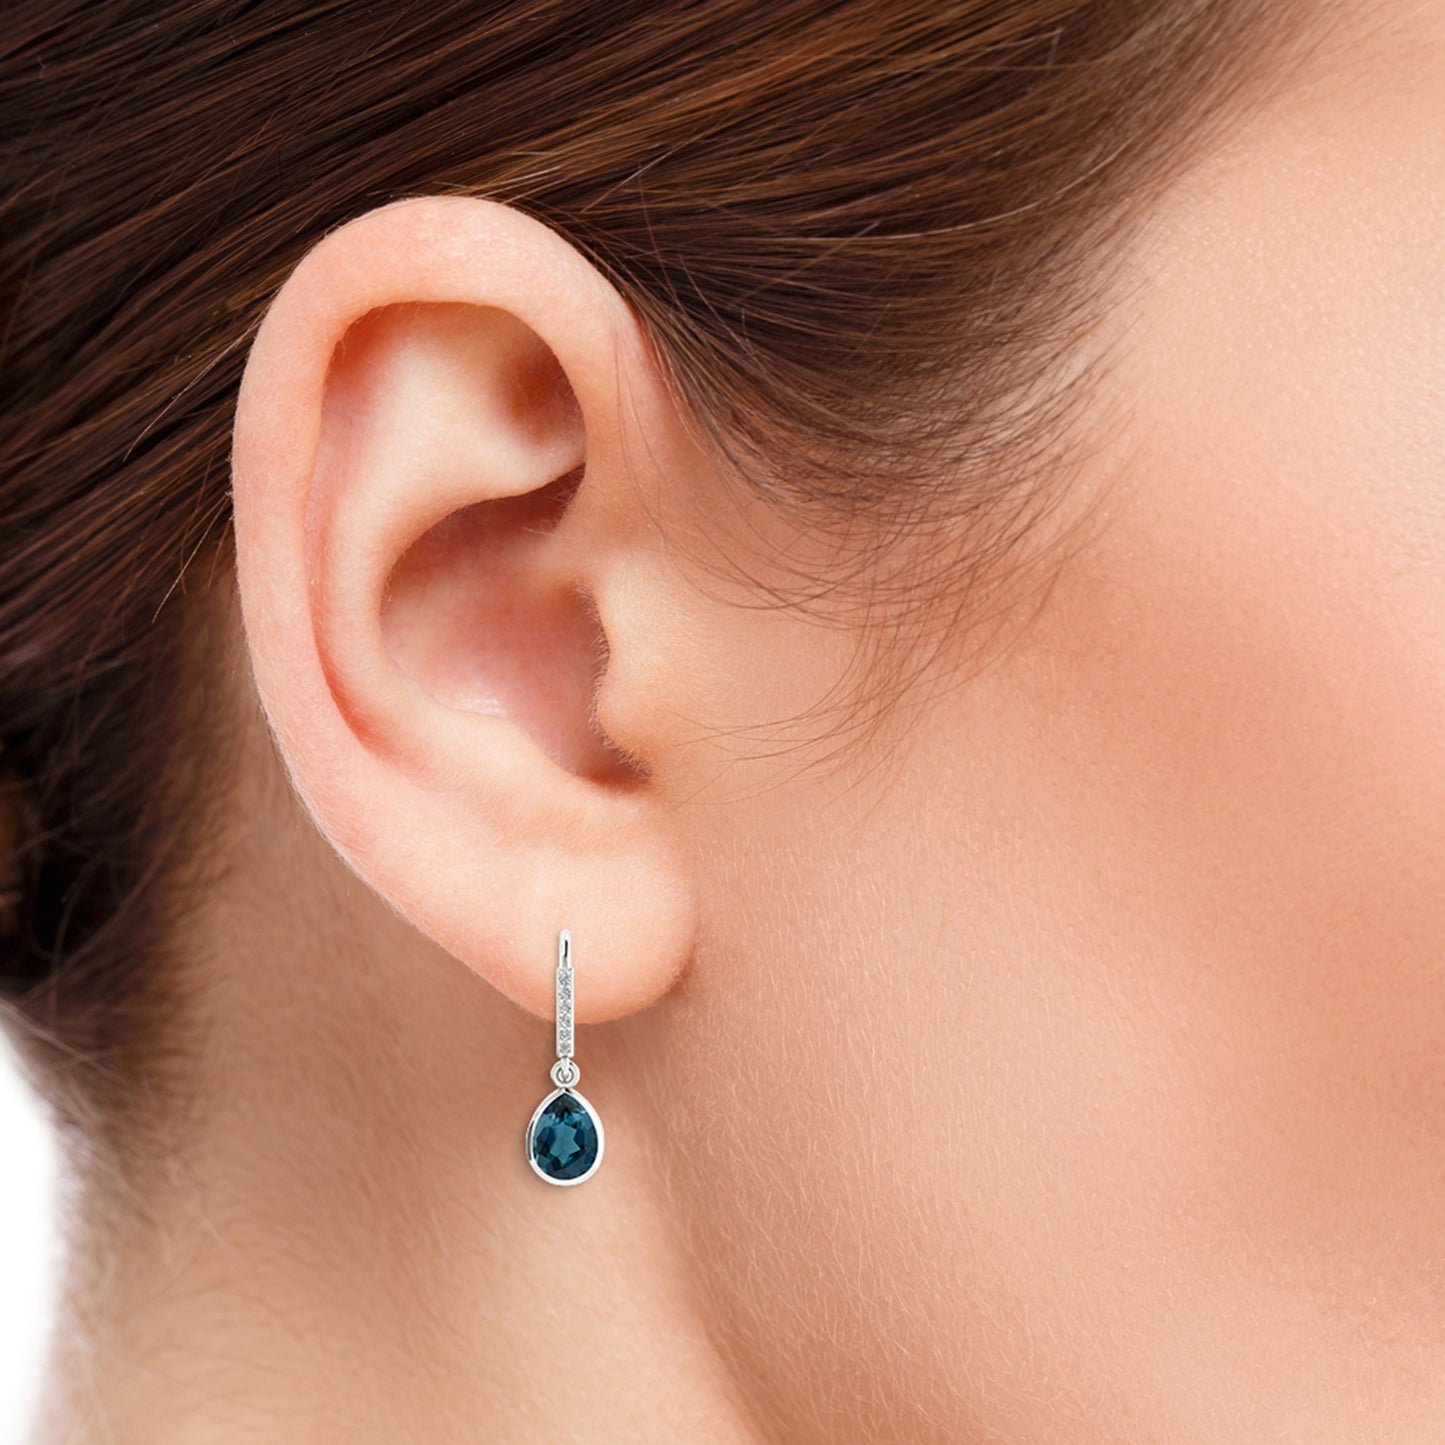 Solid 14k Gold Drop Earrings Genuine London Blue Topaz & Diamond Dangle Earring For Her